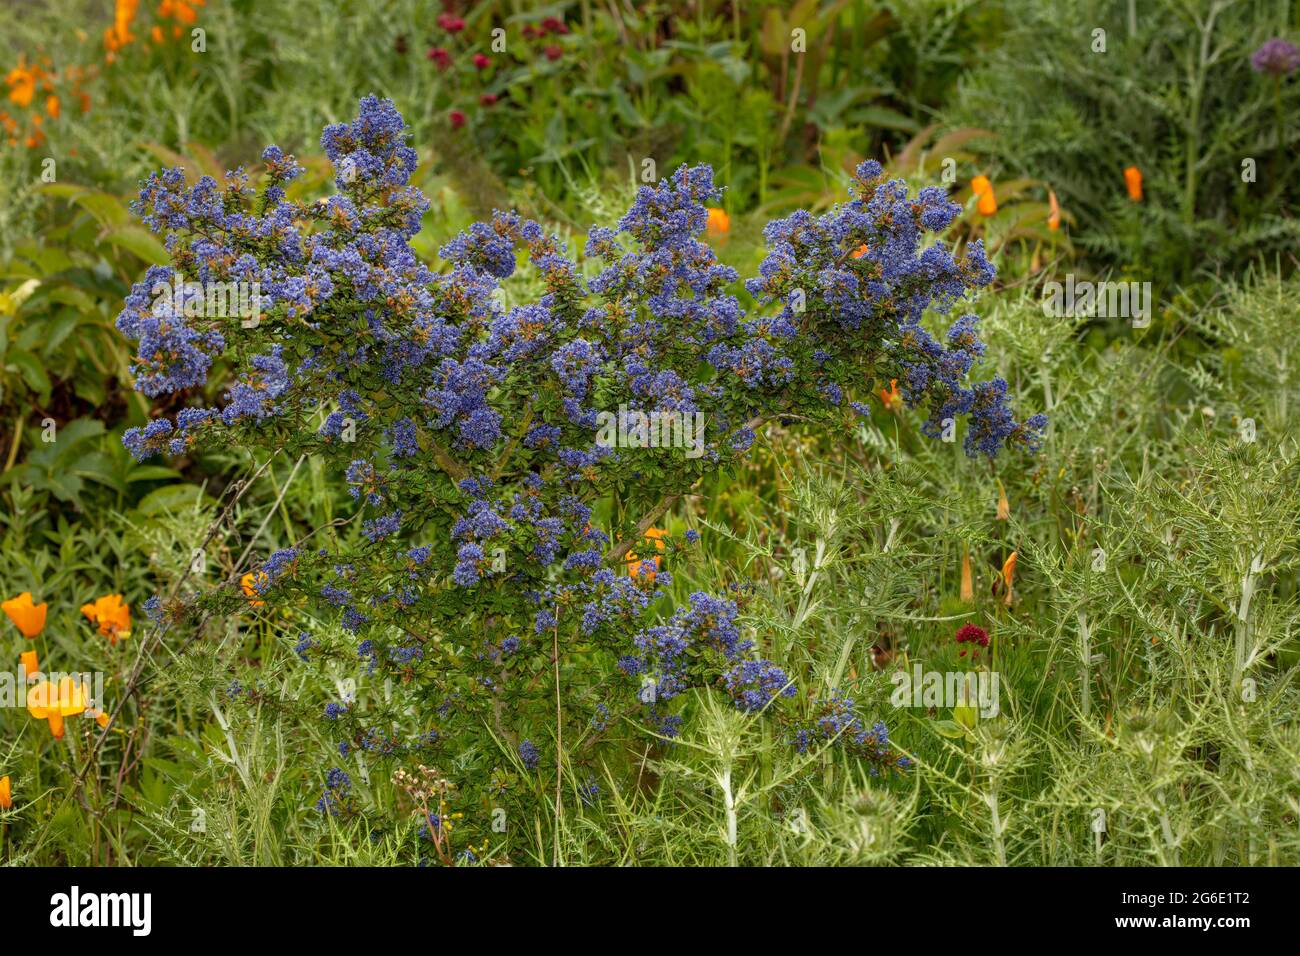 Ceanothus 'Dark Star’, Californian lilac 'Dark Star' flowering in a natural garden setting Stock Photo